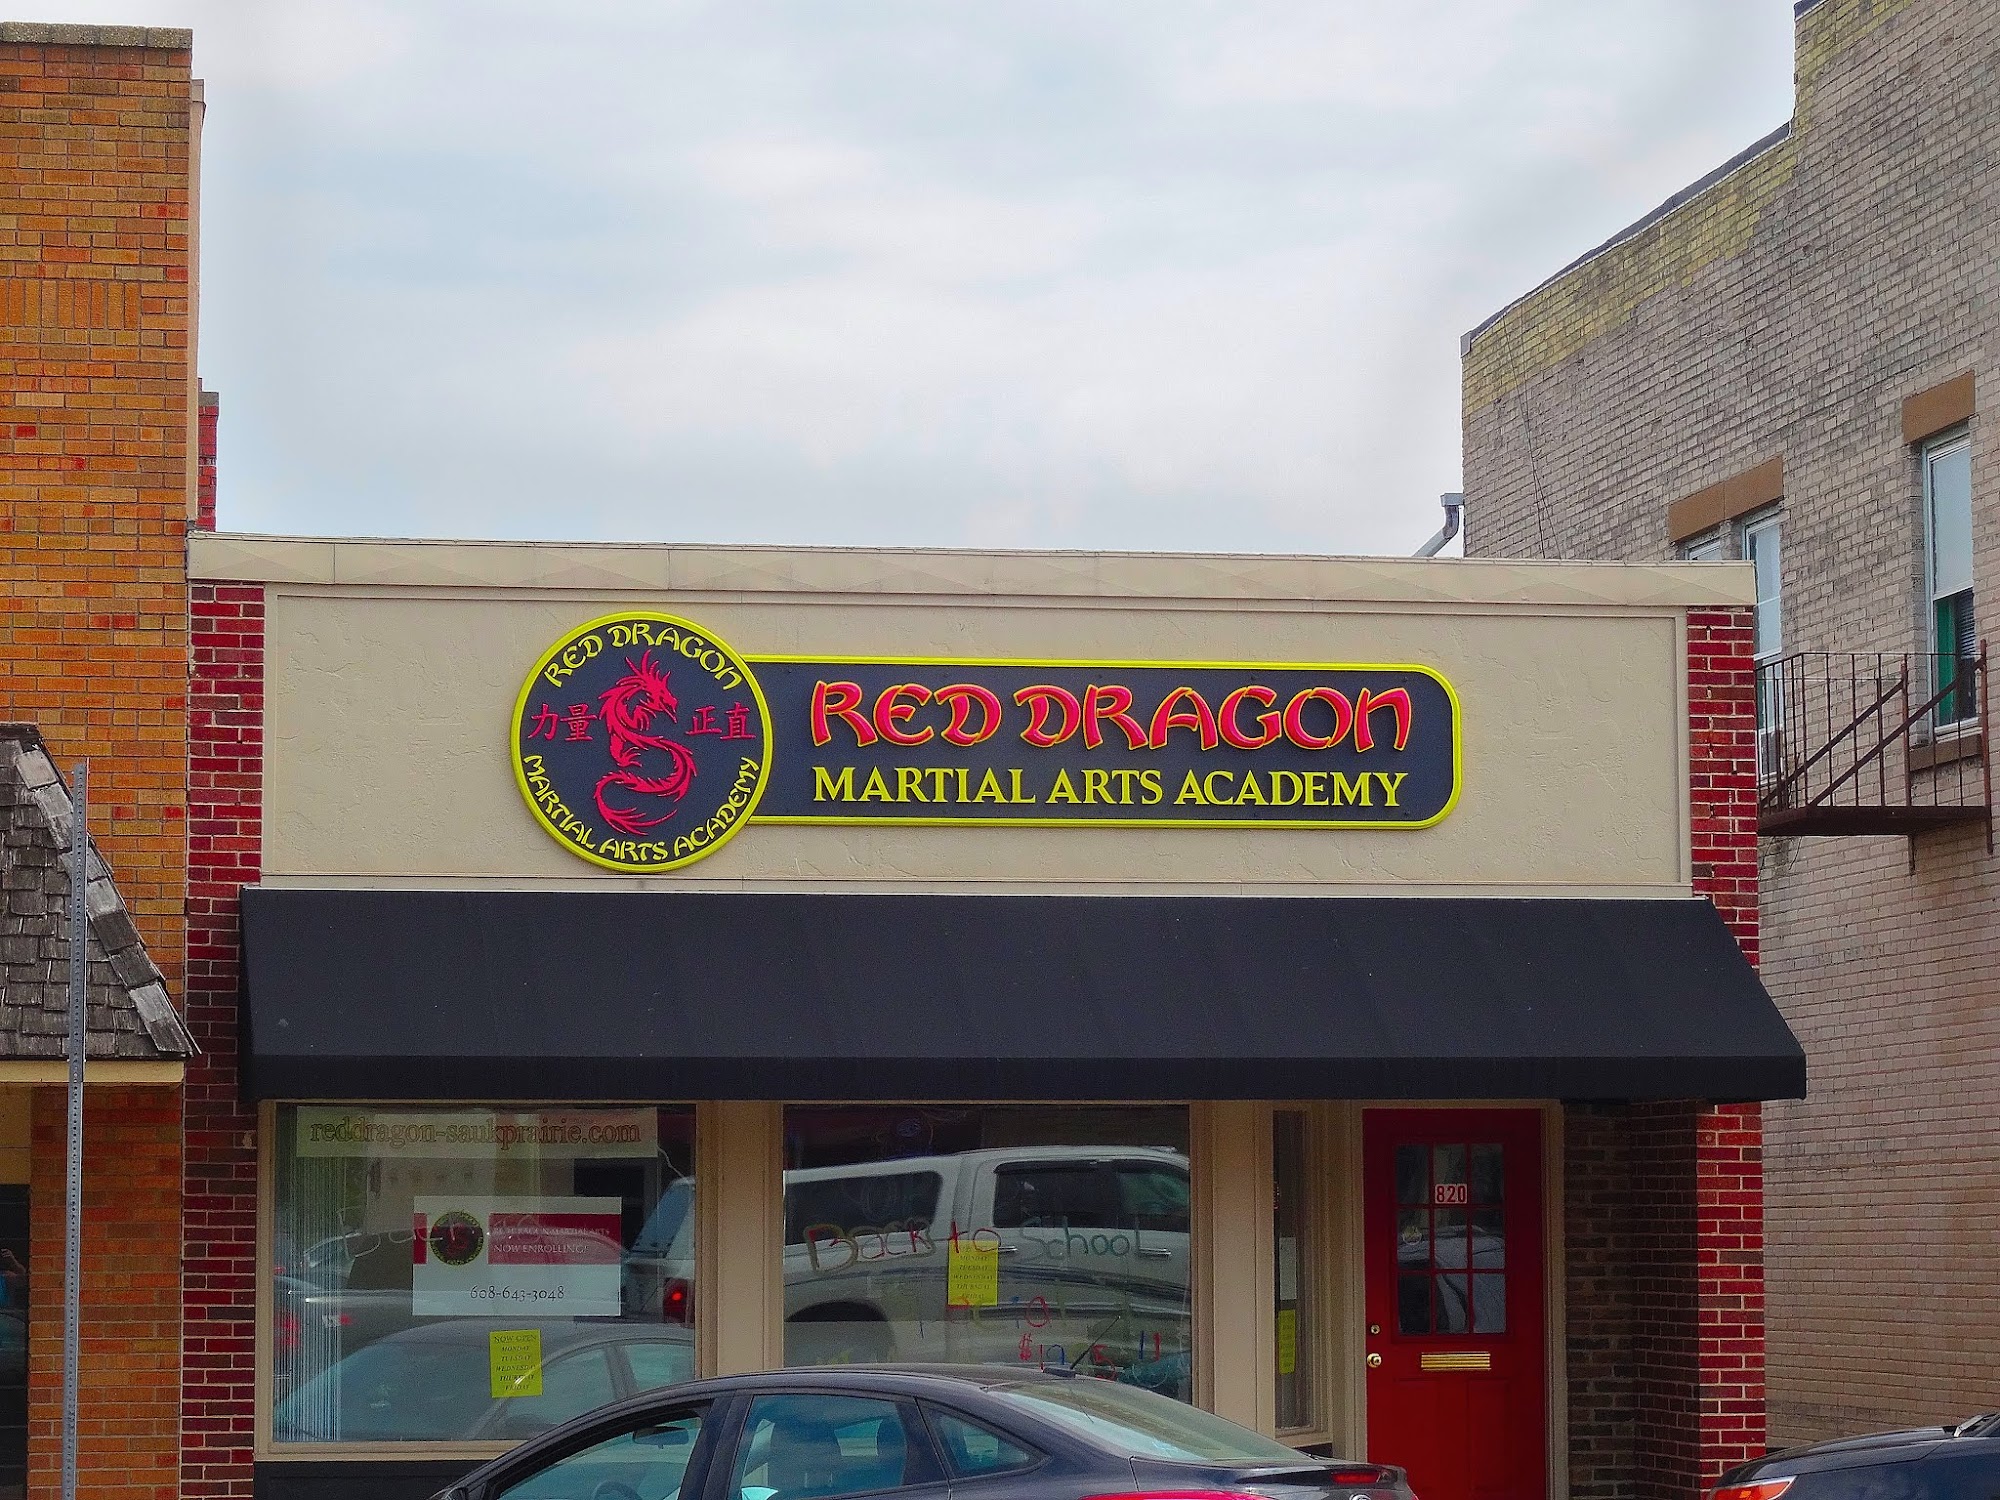 Red Dragon Martial Arts Academy 820 Water St, Sauk City Wisconsin 53583